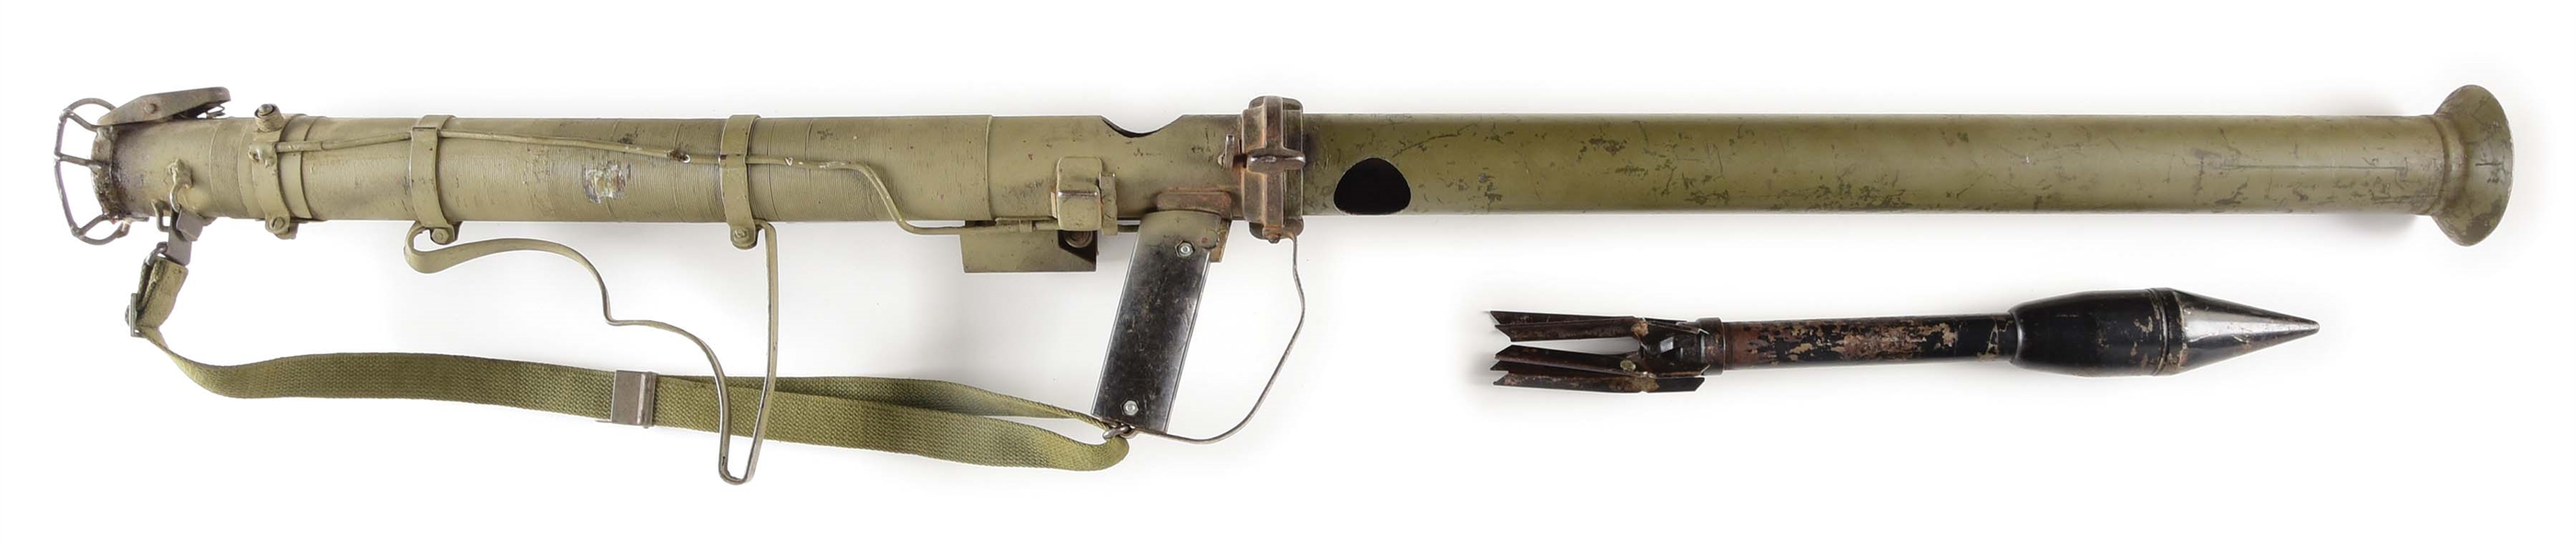 SCARCE DEMILLED WORLD WAR II US EARLY M9A1 BAZOOKA 2.75" ROCKET LAUNCHER WITH INERT ROCKET.